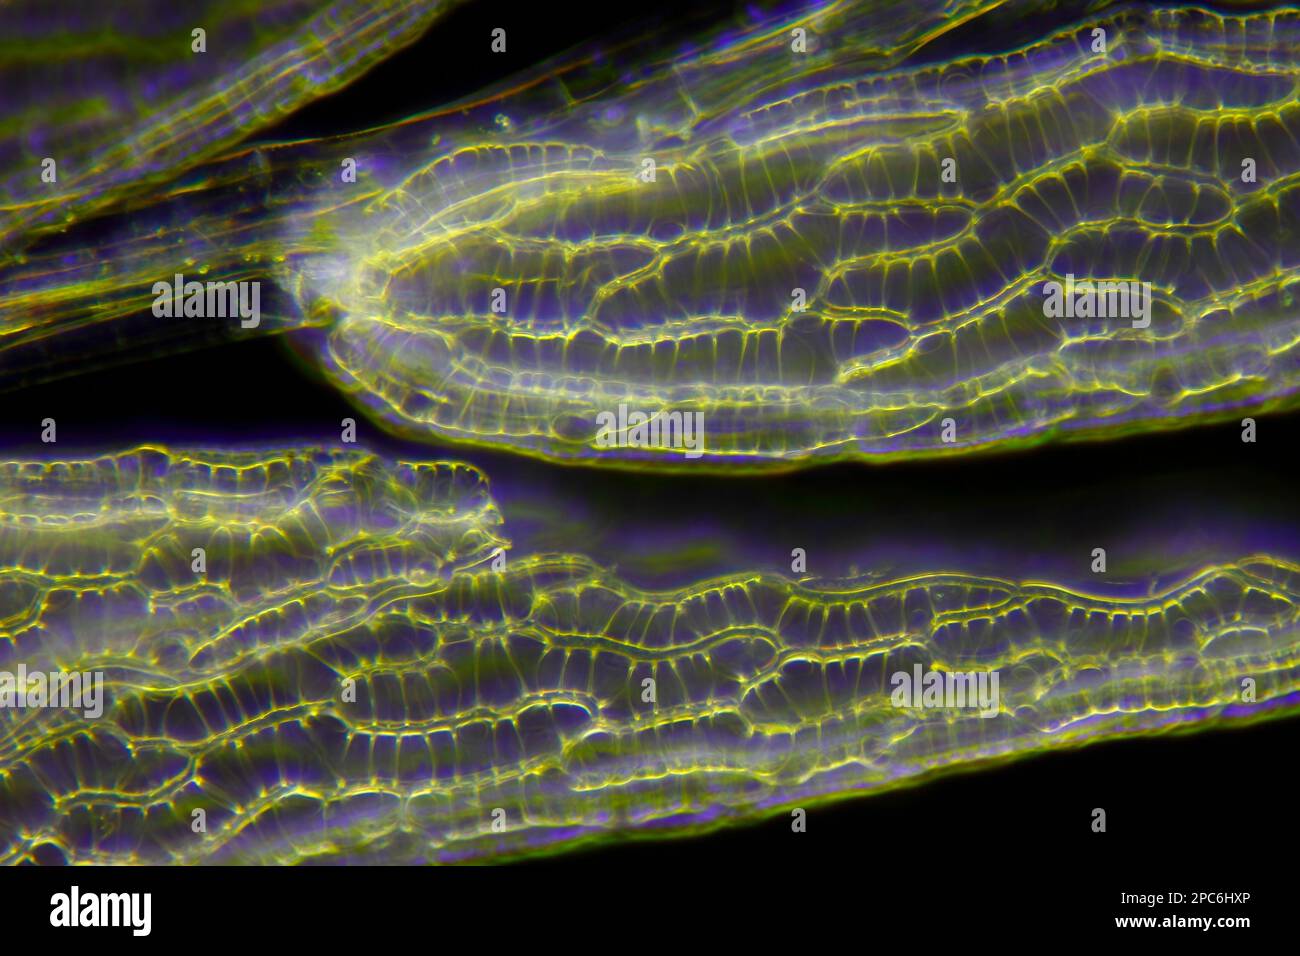 Microscopic view of peat moss (Sphagnum) leaves. Darkfield illumination. Stock Photo